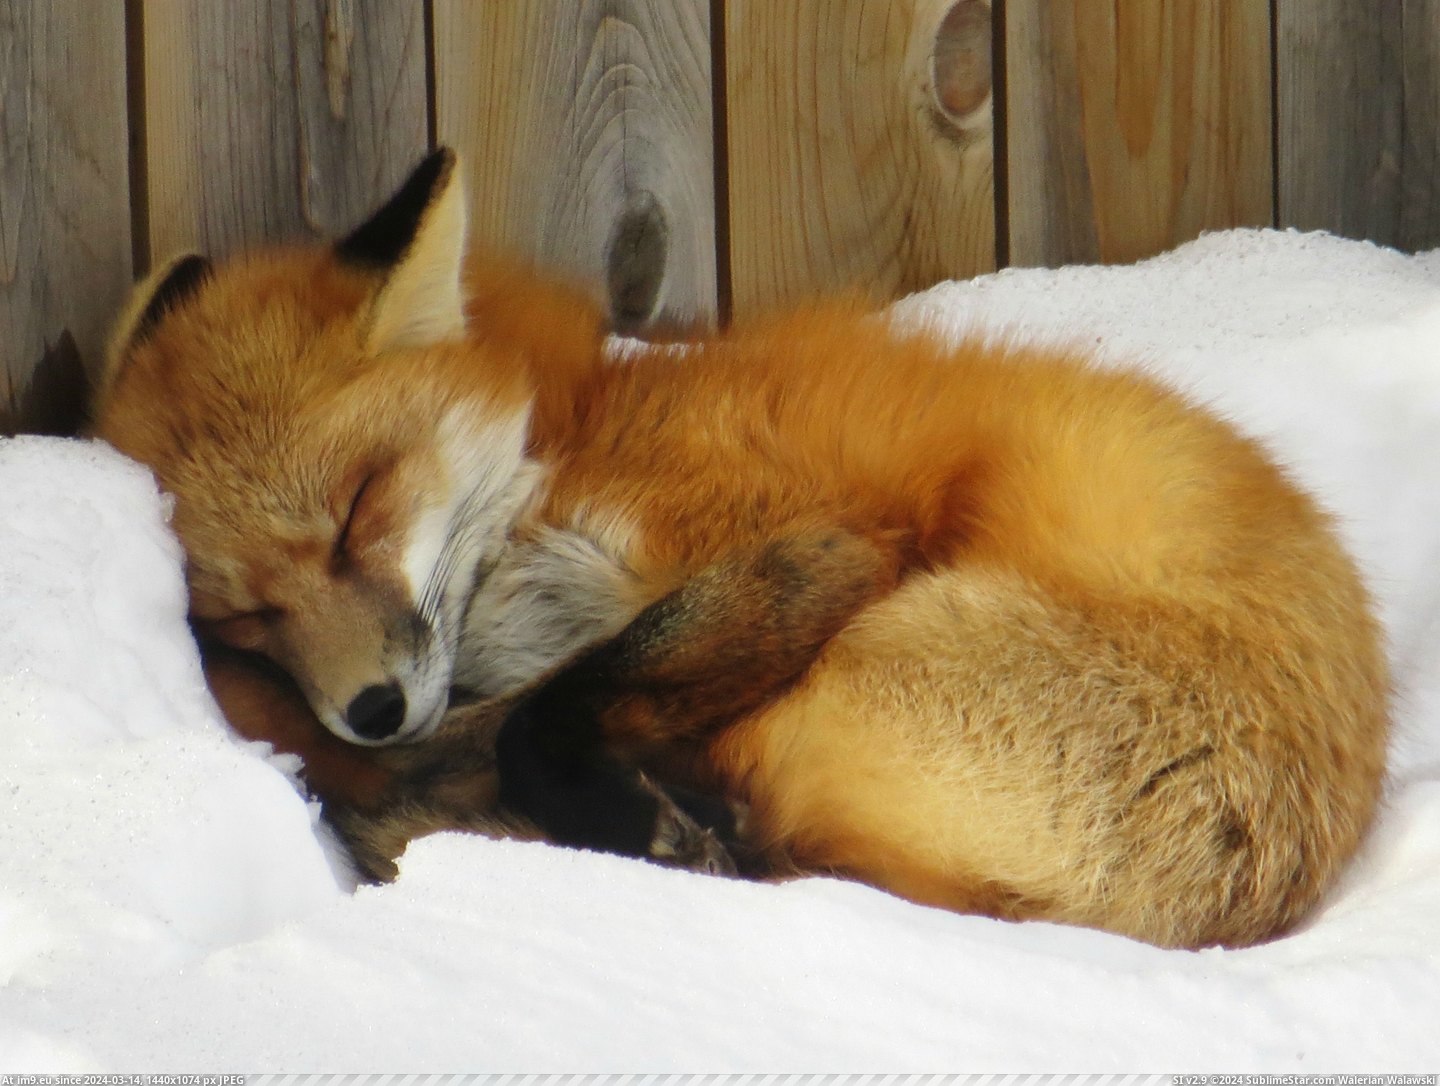 #Red #Canada #Alberta #Backyard #Fox #Sleeping [Pics] Red fox sleeping in my backyard! Alberta, Canada. 1 Pic. (Bild von album My r/PICS favs))